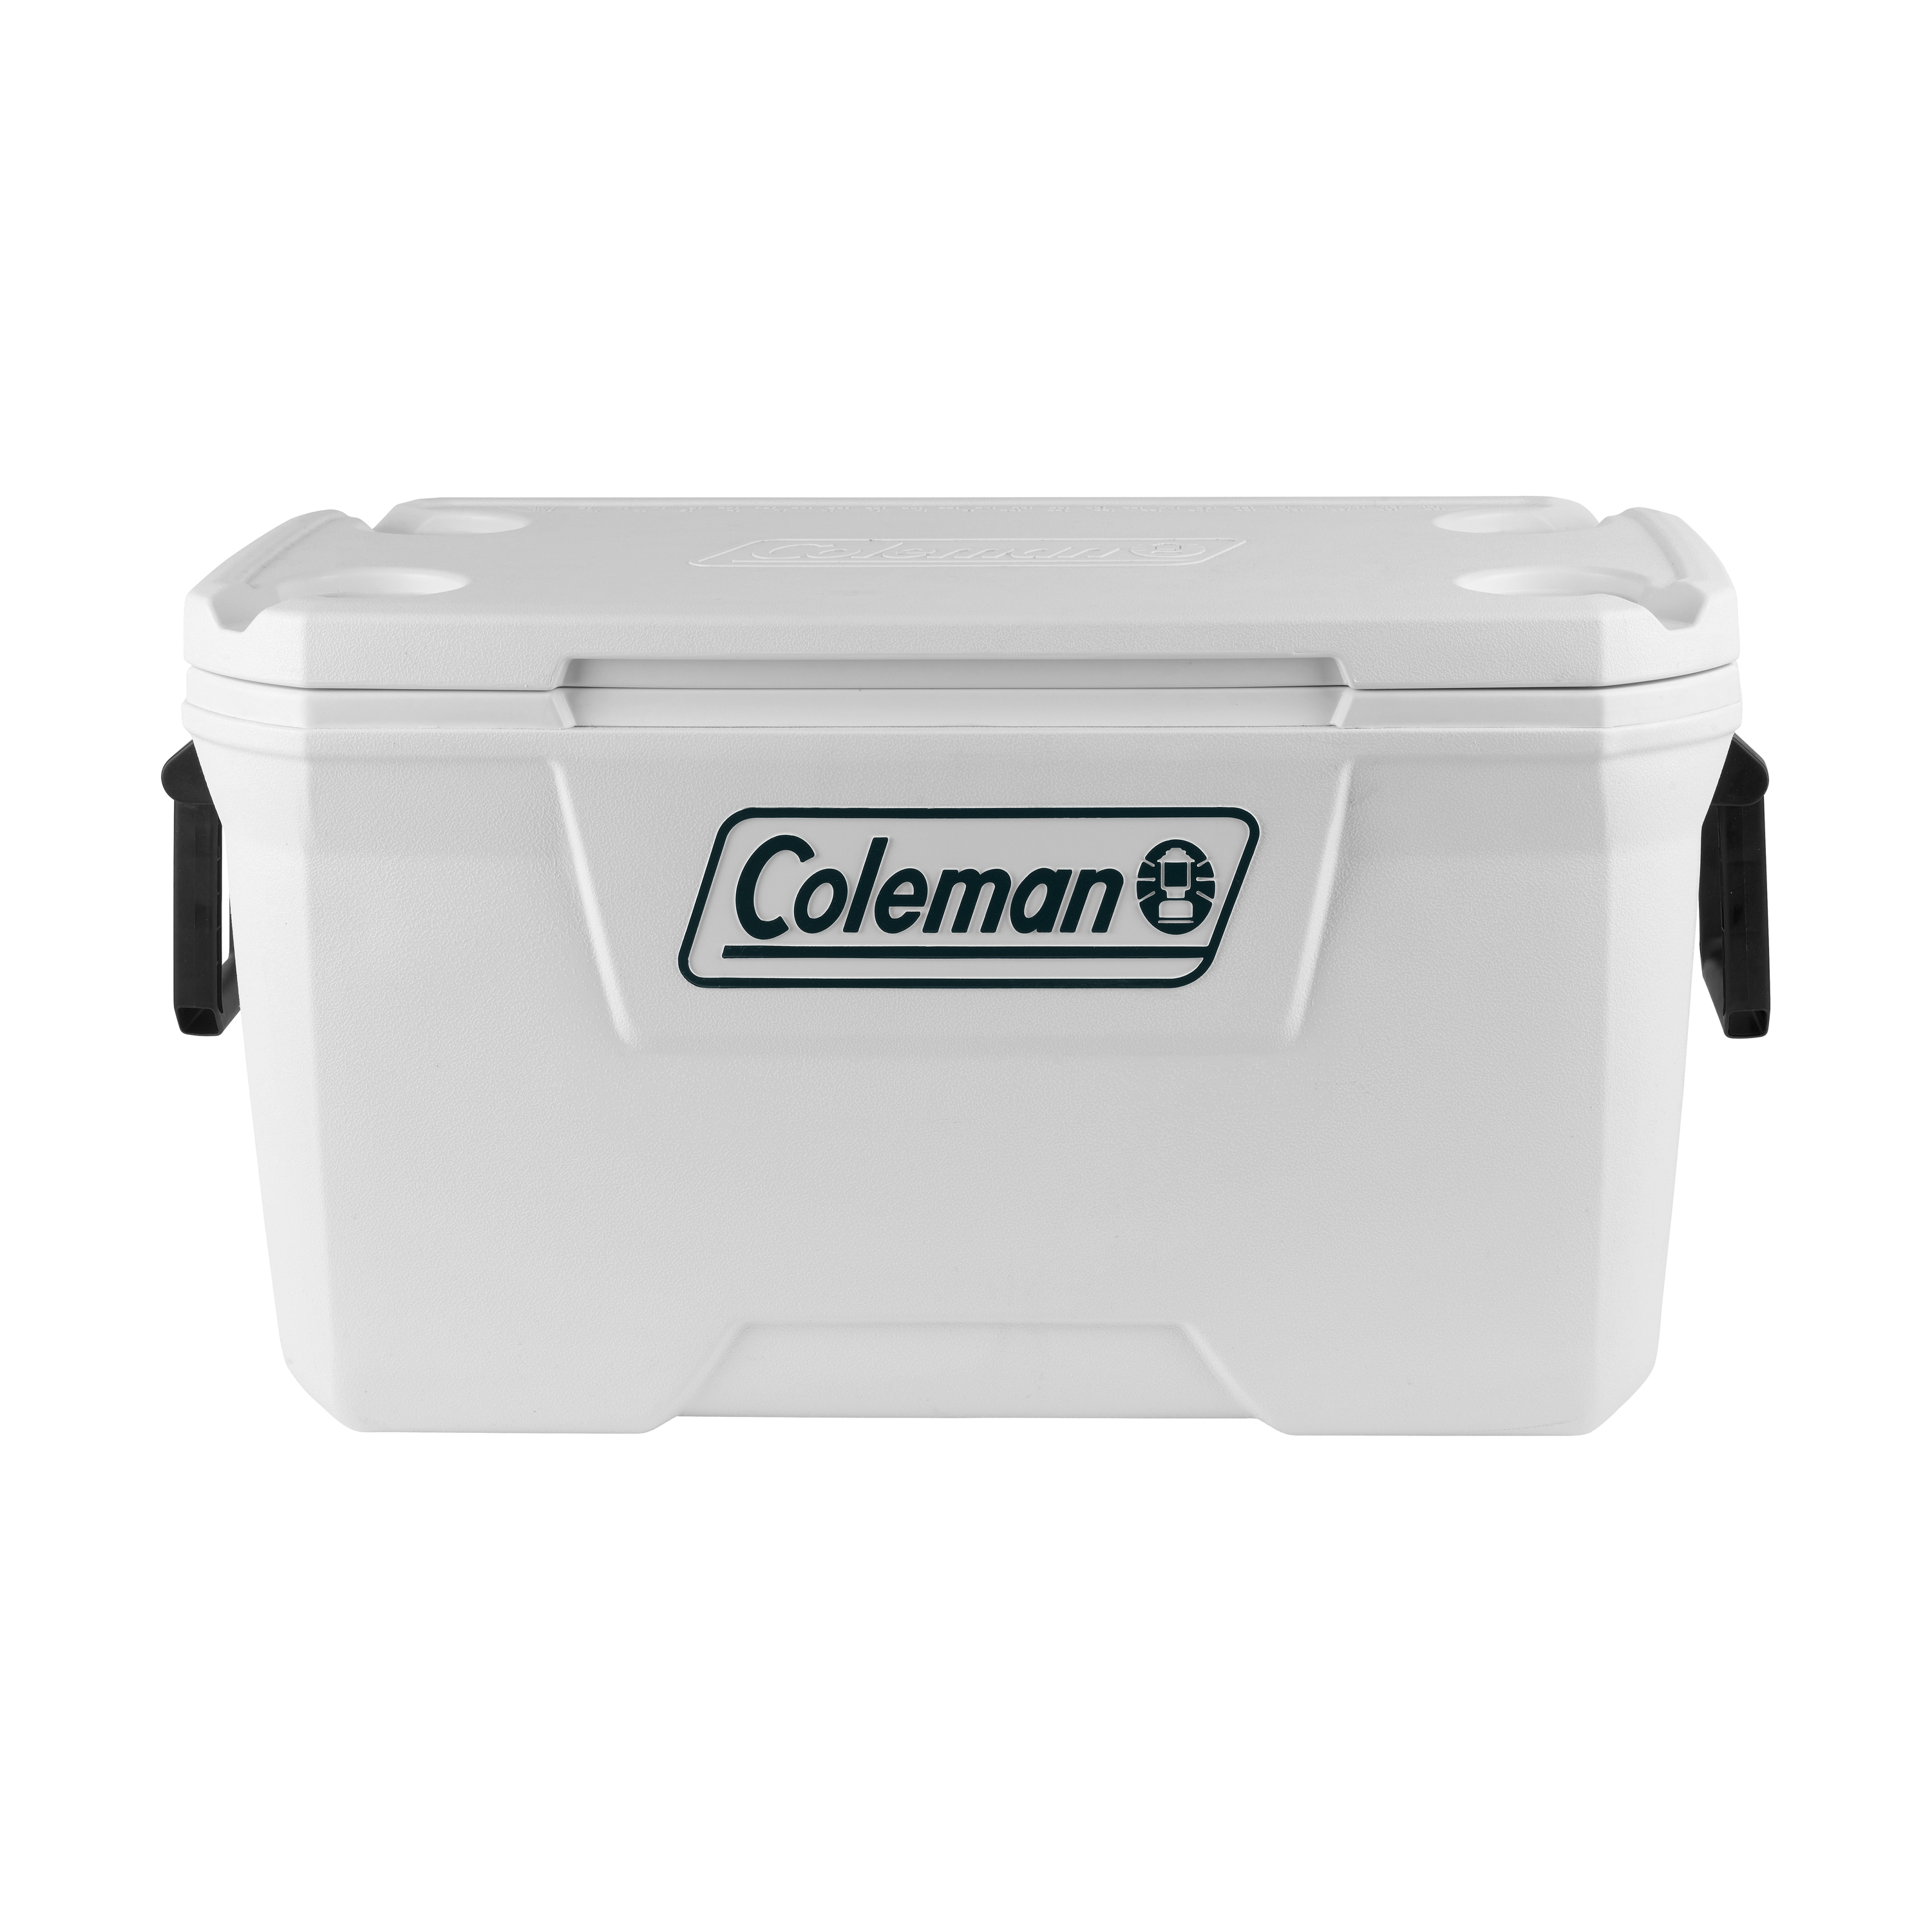 COLEMAN Coleman 70QT chest Marine Cooler chladící box na led